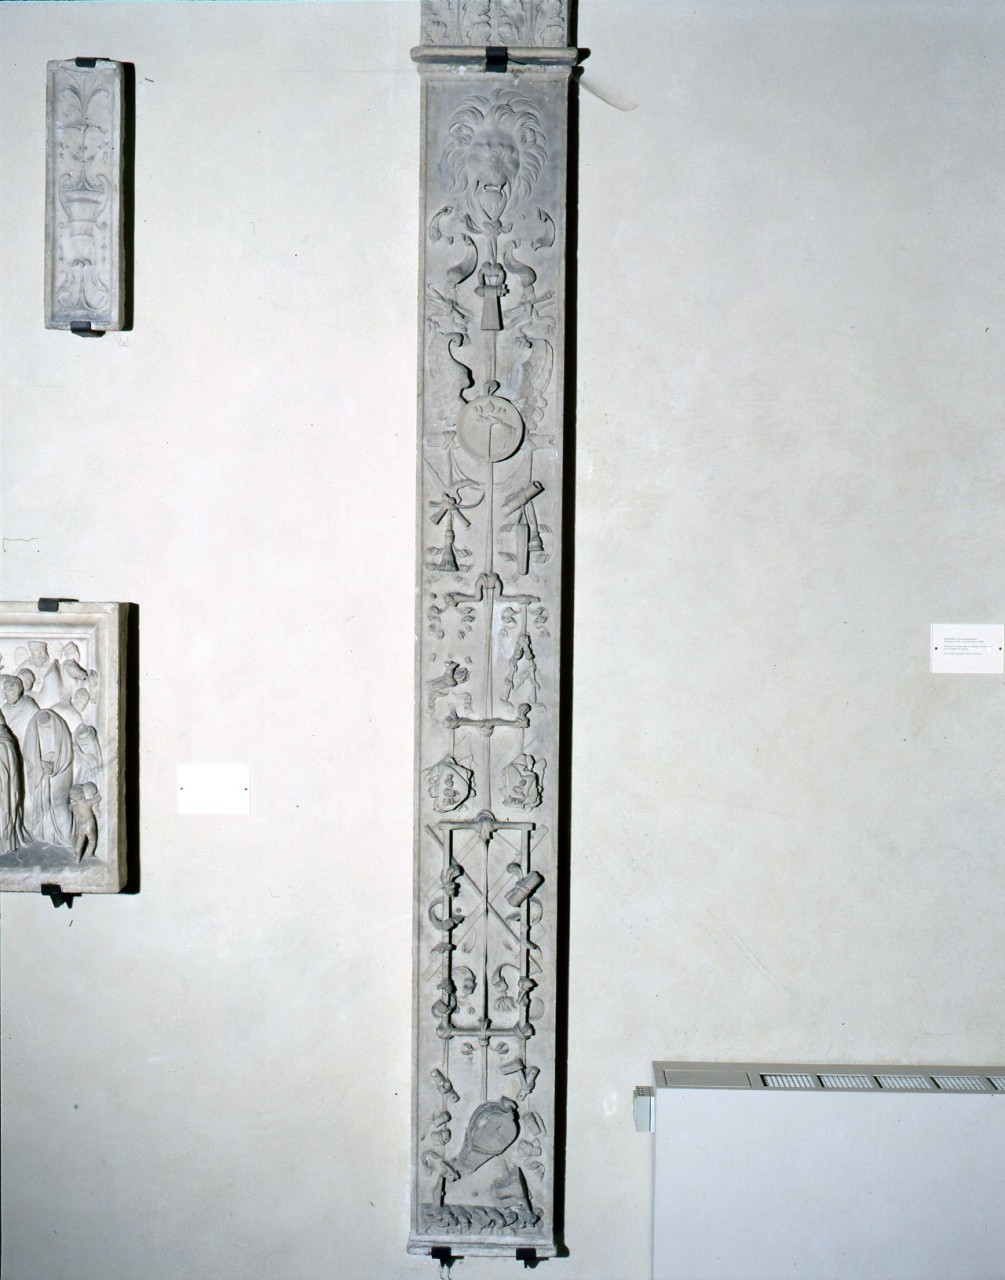 motivo decorativo a candelabra (parasta) di Benedetto da Rovezzano (primo quarto sec. XVI)